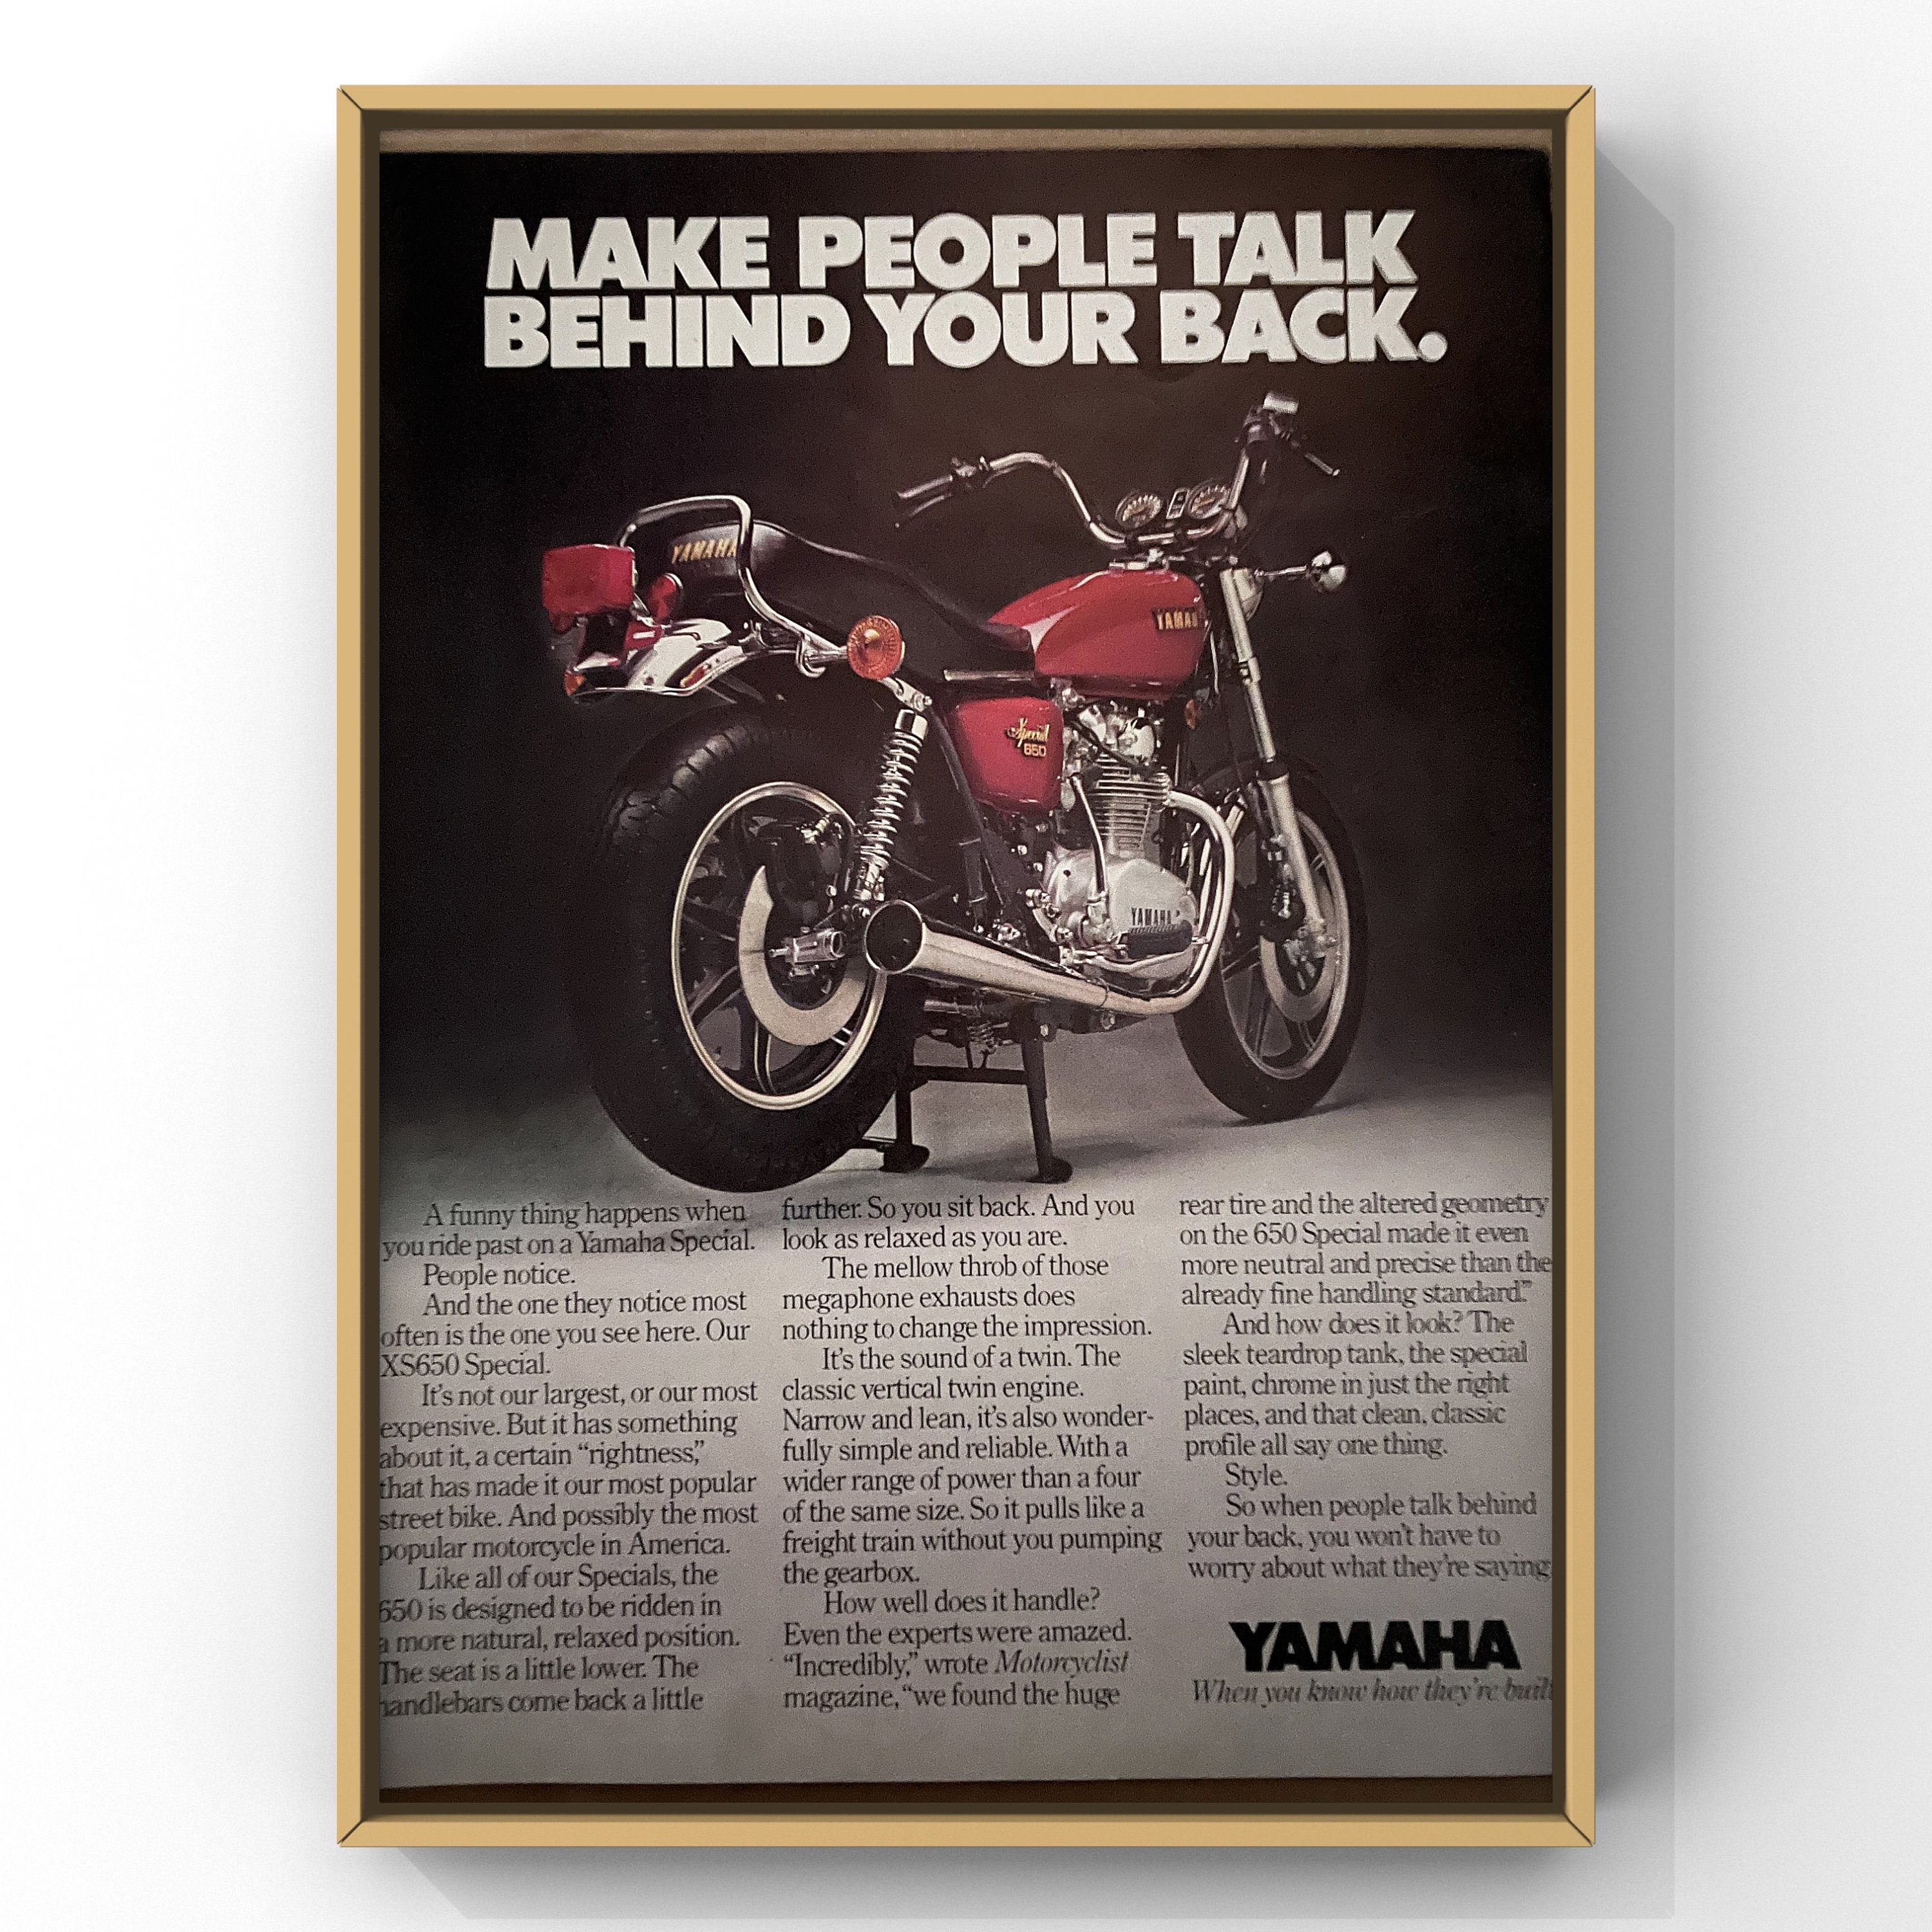 1969 Yamaha 250 cc Street Scrambler Enduro motorcycle vintage advertisement  69